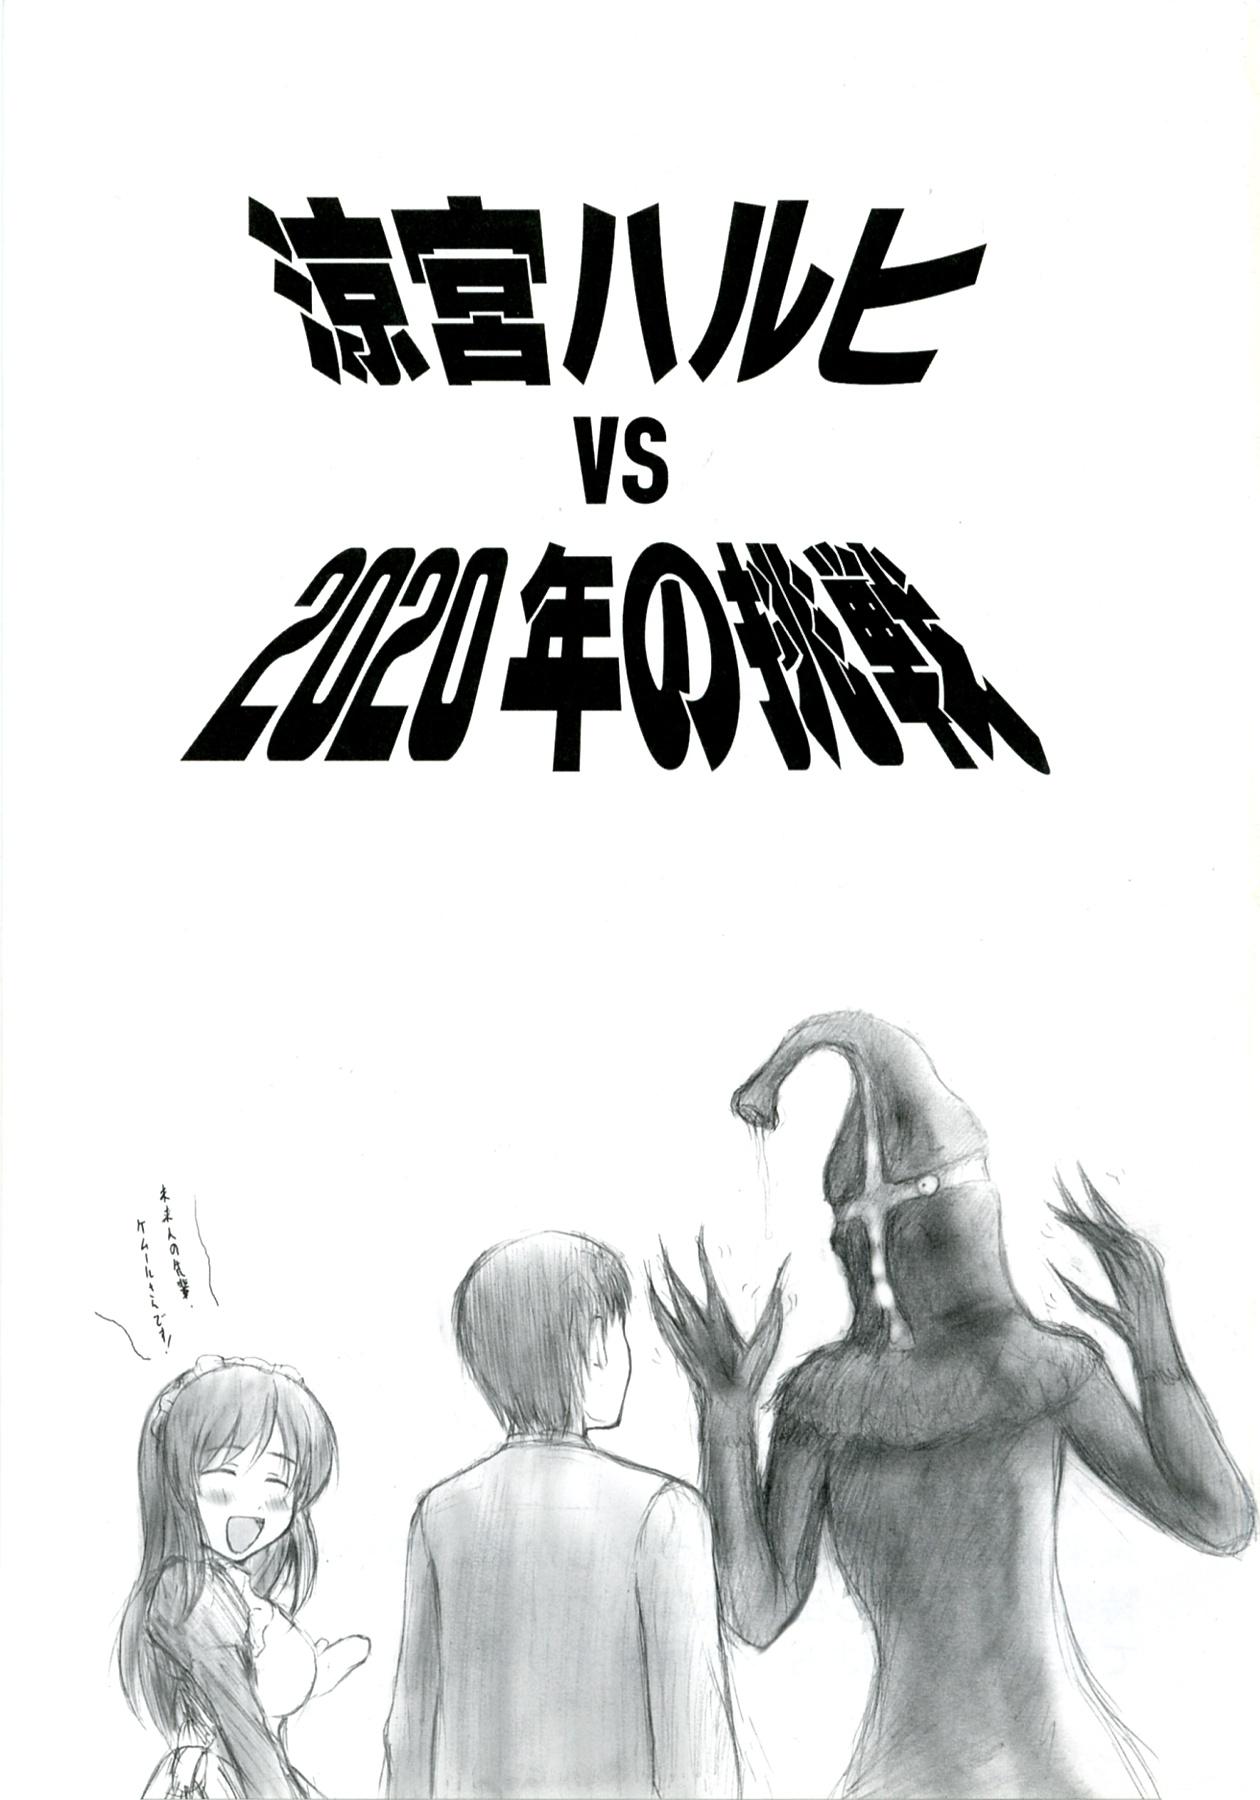 Suzumiya Haruhi vs 2020 Nen no Chousen 2